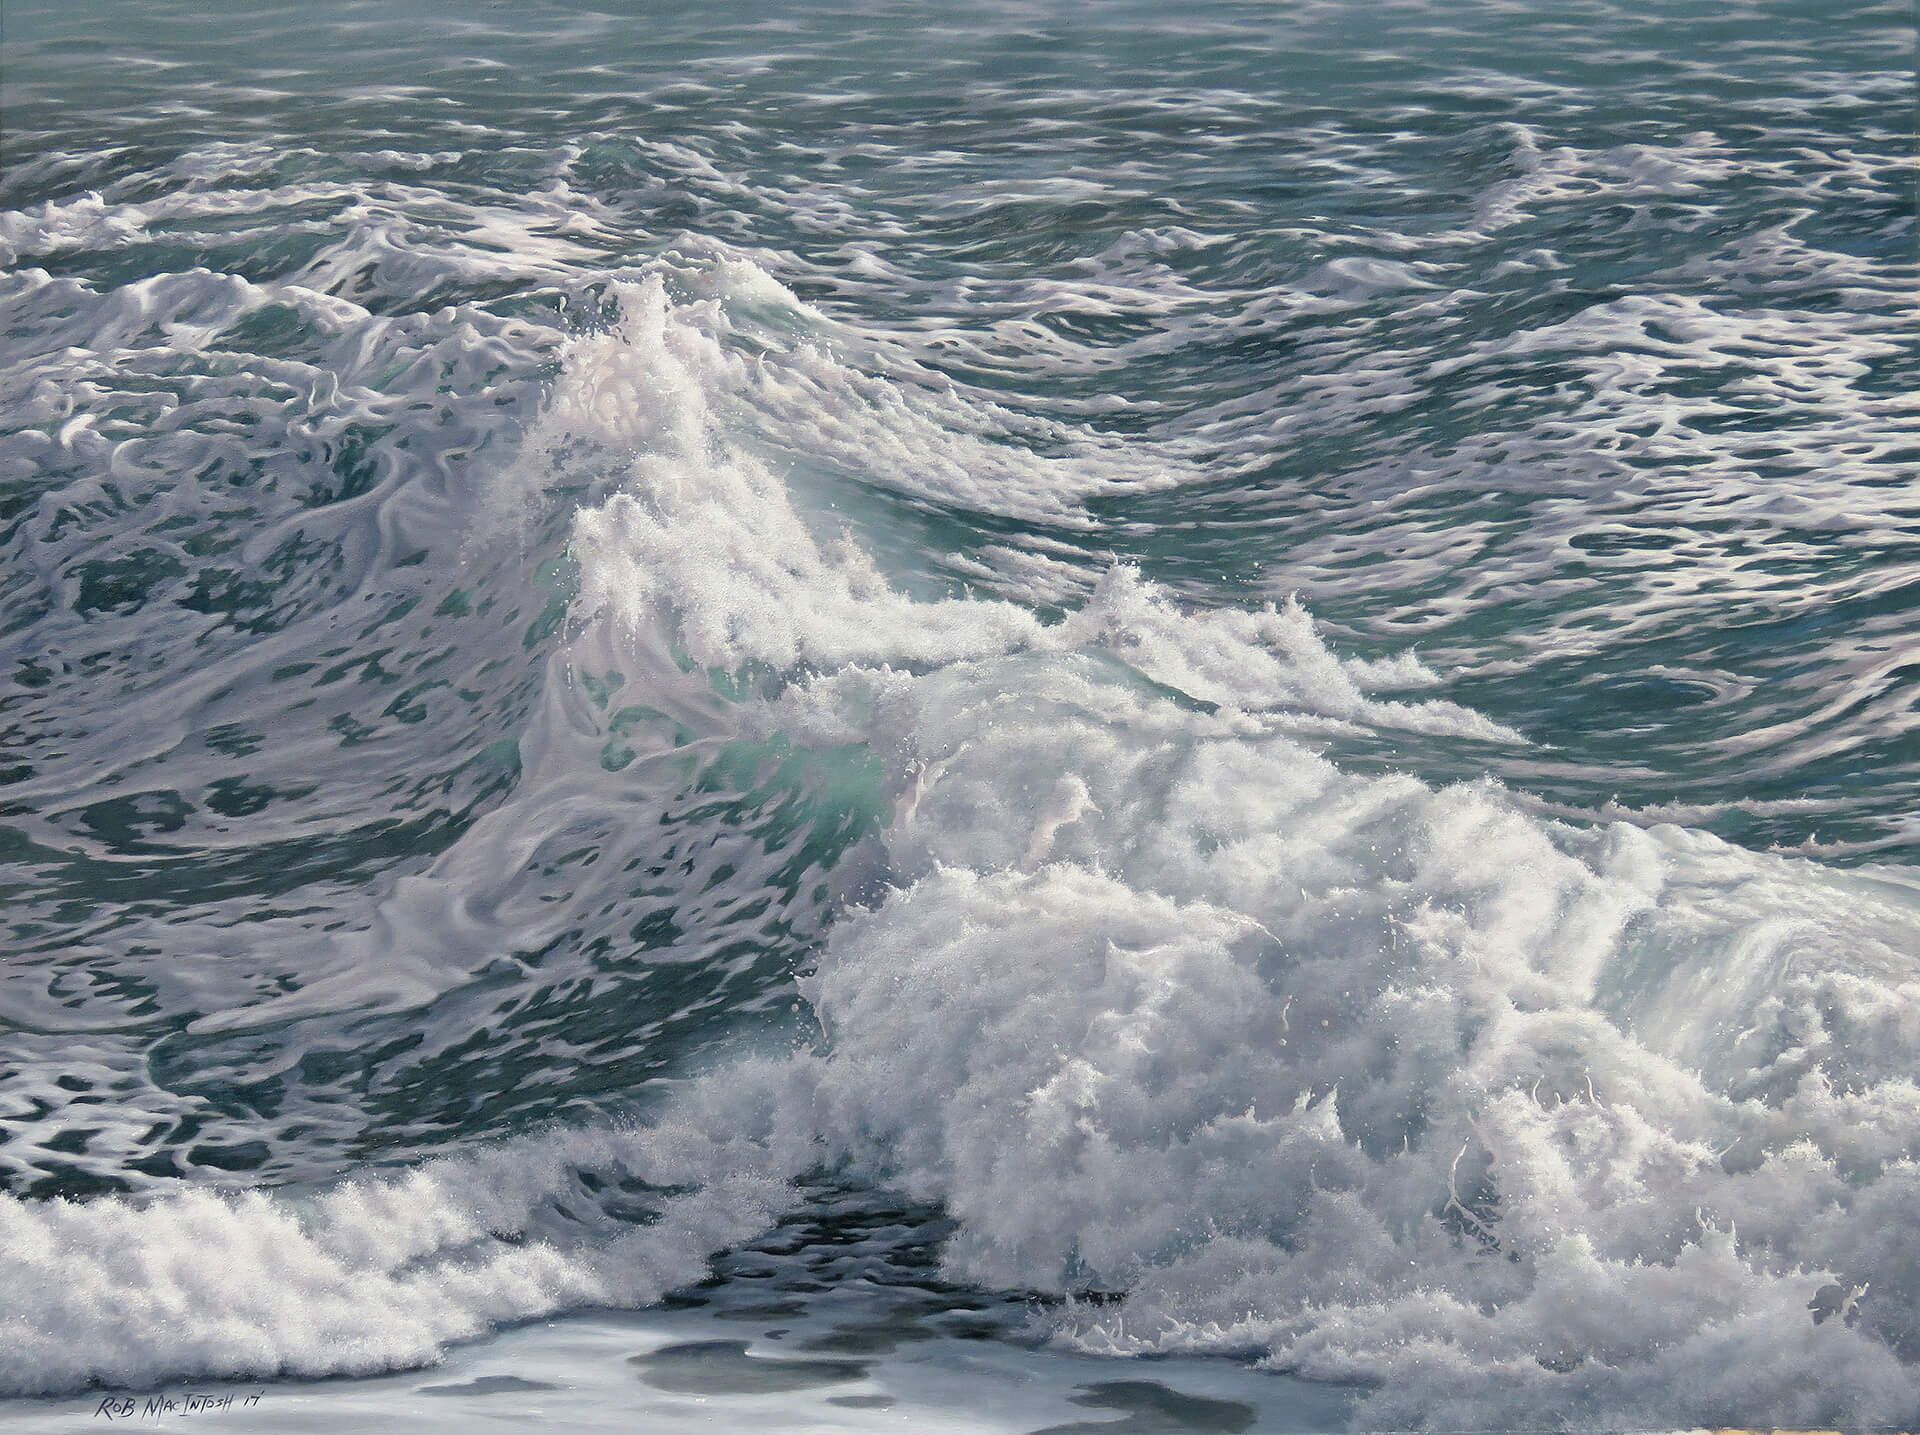 Photorealistic painting of waves crashing together